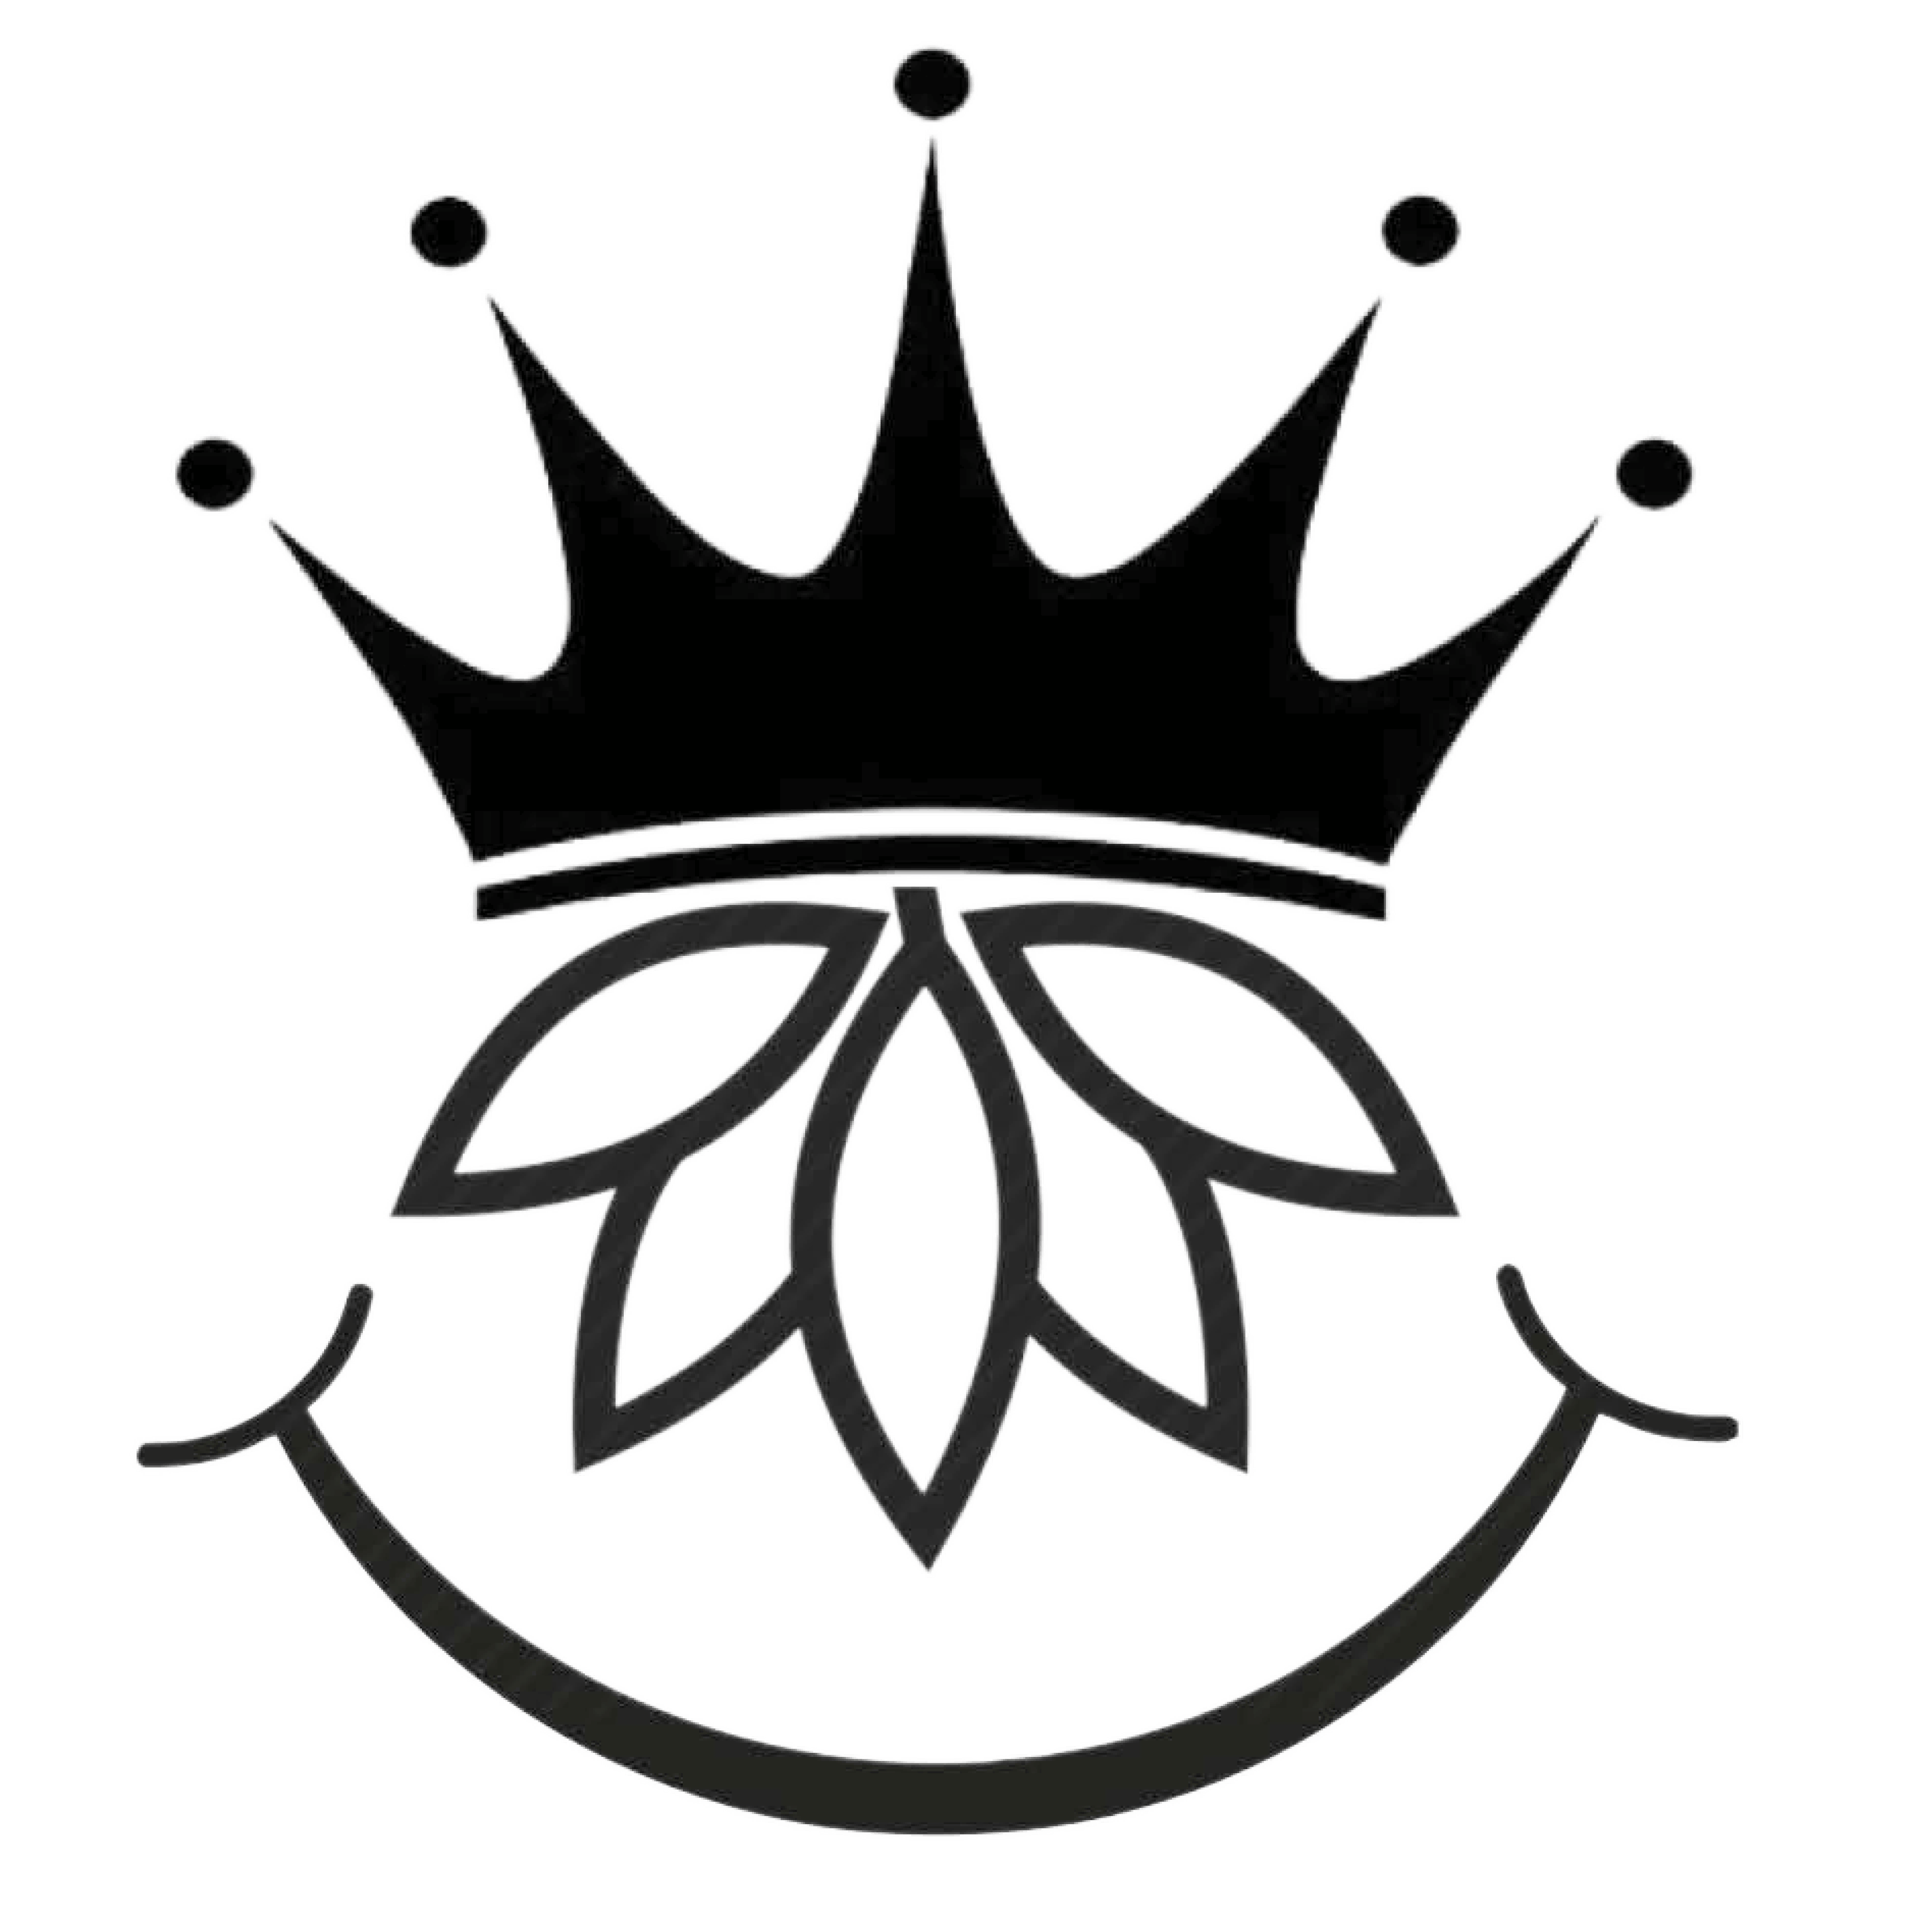 The Crown Leaf Cannabis logo